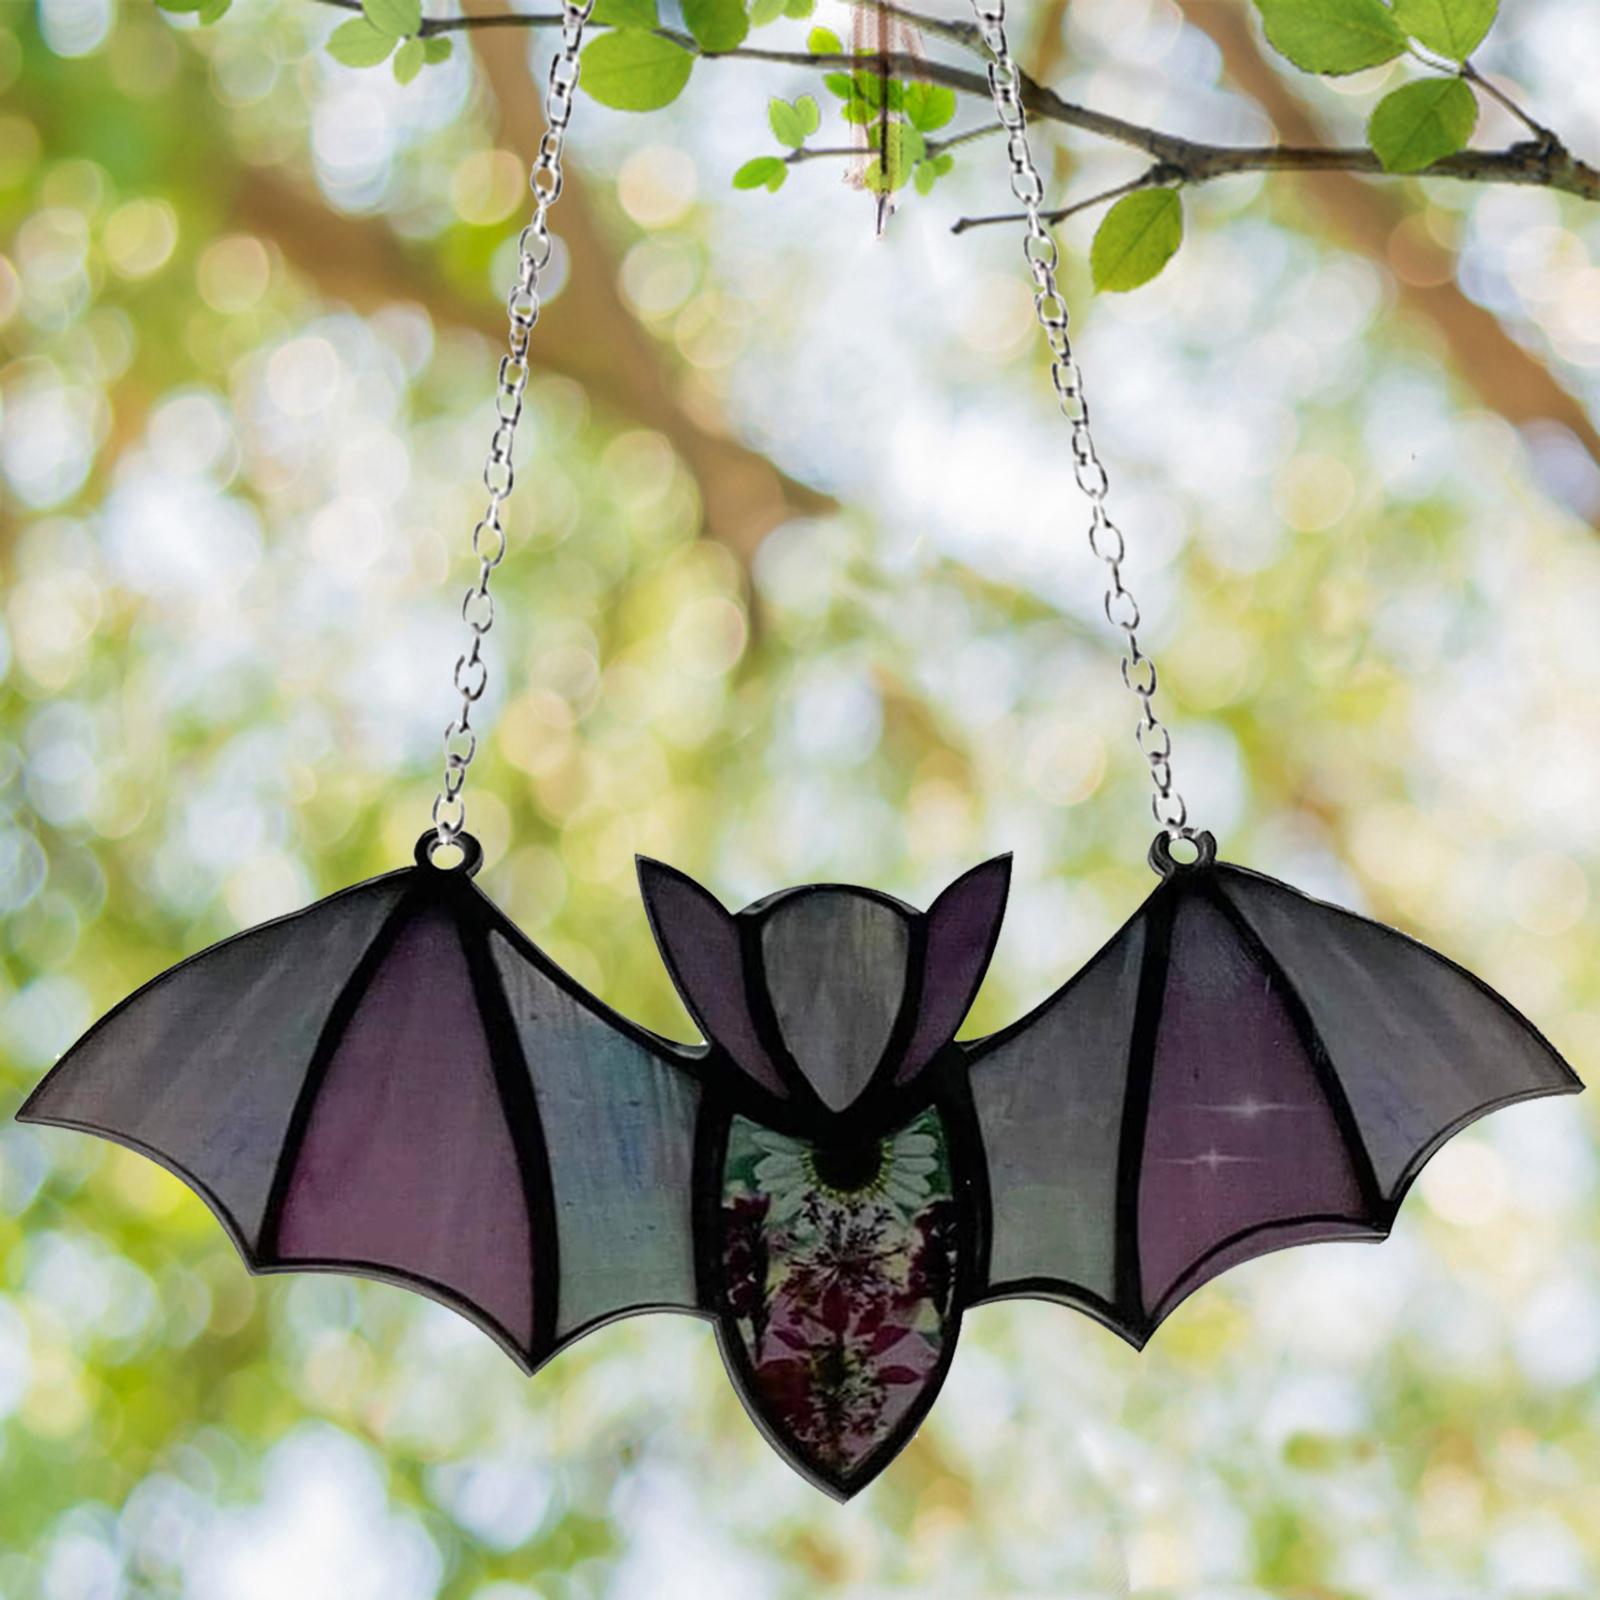 Hanging Bat Decoration Hanging Ornament Pendant for Garden Patio Home Decor 20cmx9.5cm Colorful